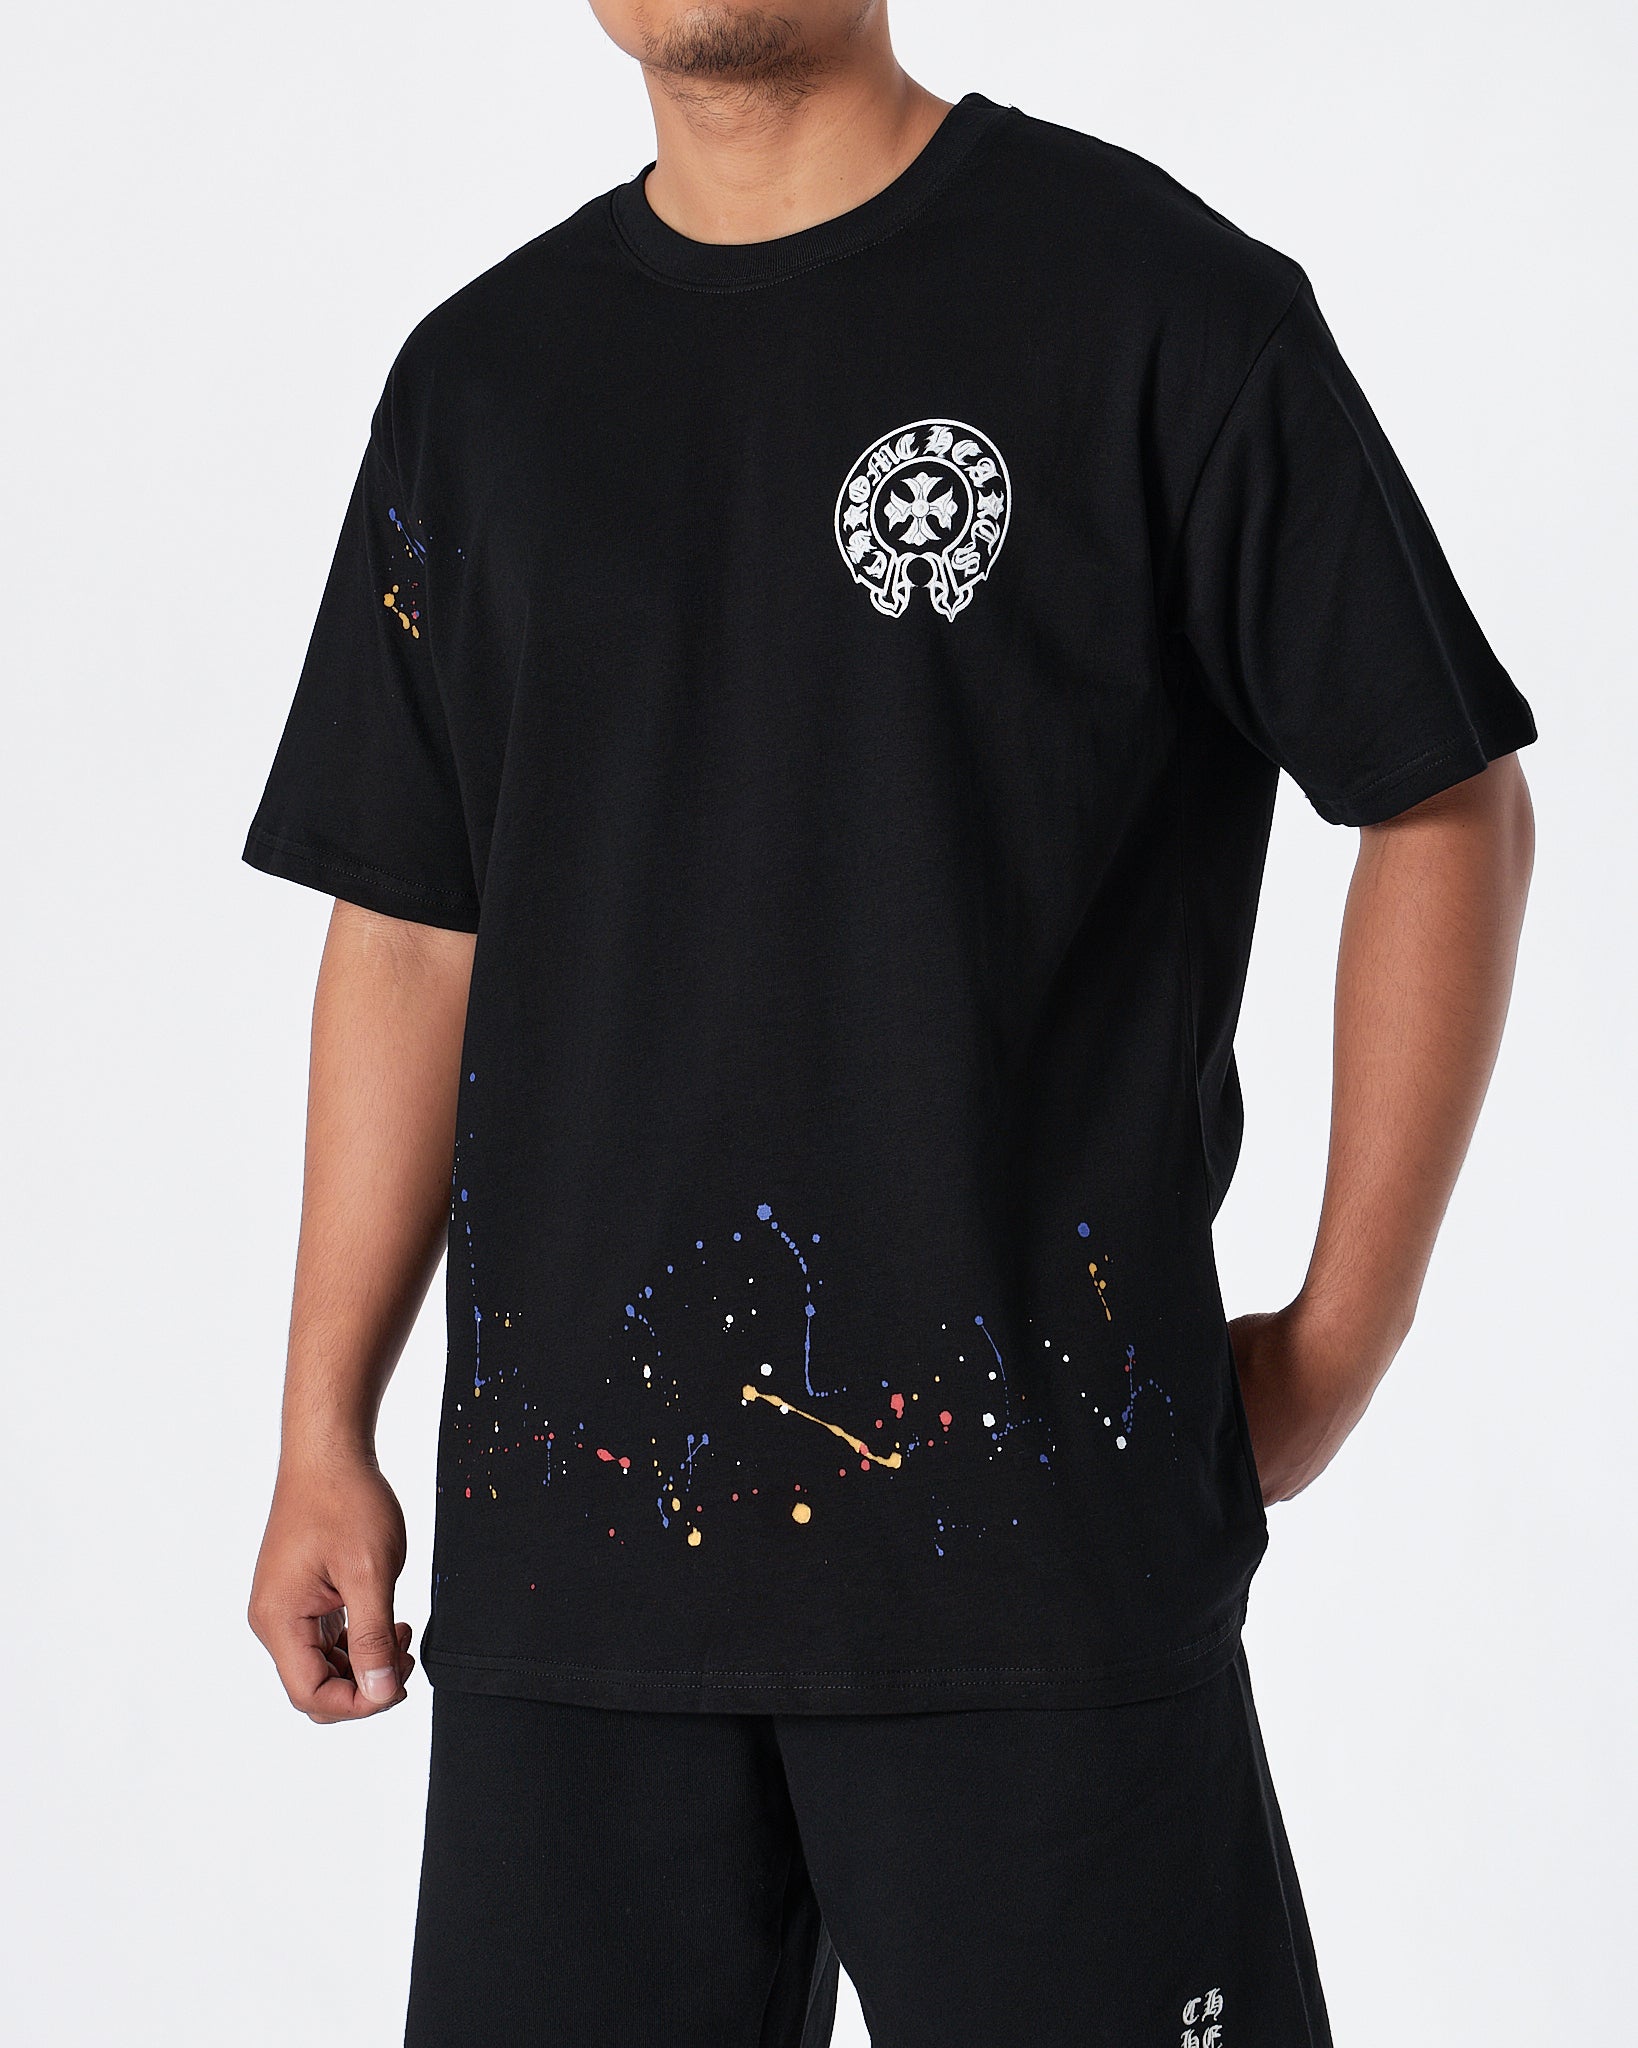 MOI OUTFIT-CH Ink Splash Men Black T-Shirt 24.90